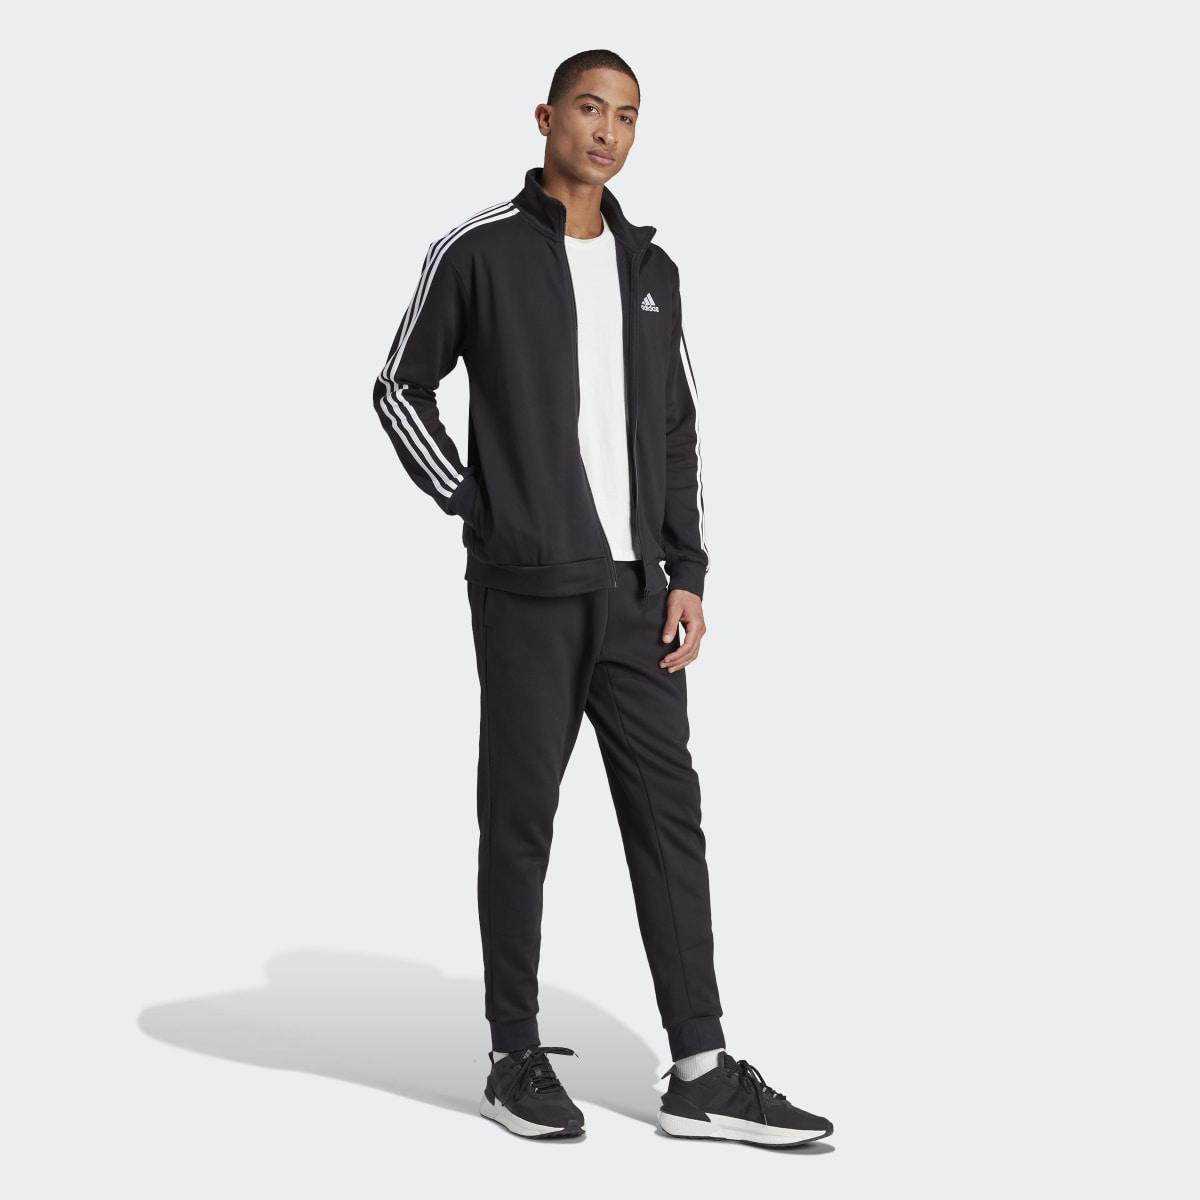 Adidas Basic 3-Stripes Fleece Track Suit - IJ6067